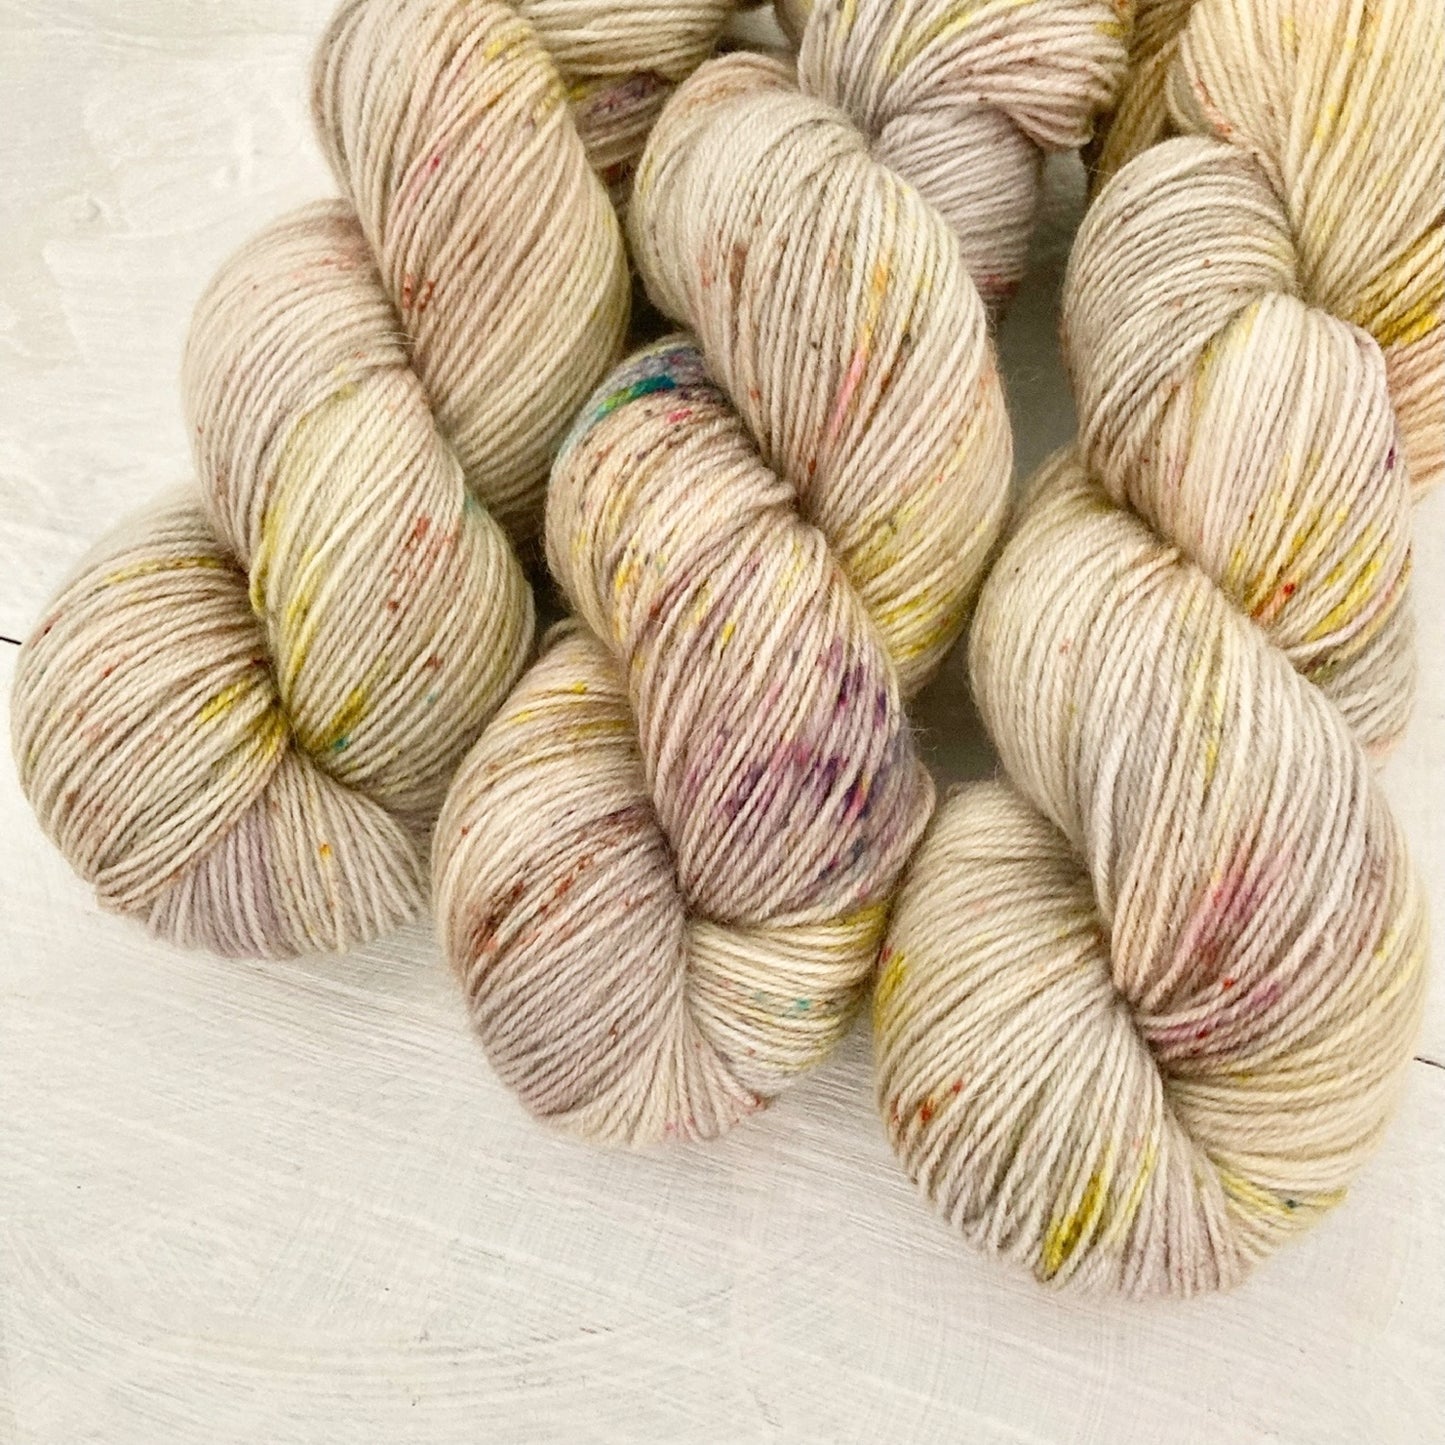 Hand-dyed yarn No.203 sock yarn "Fossiles"